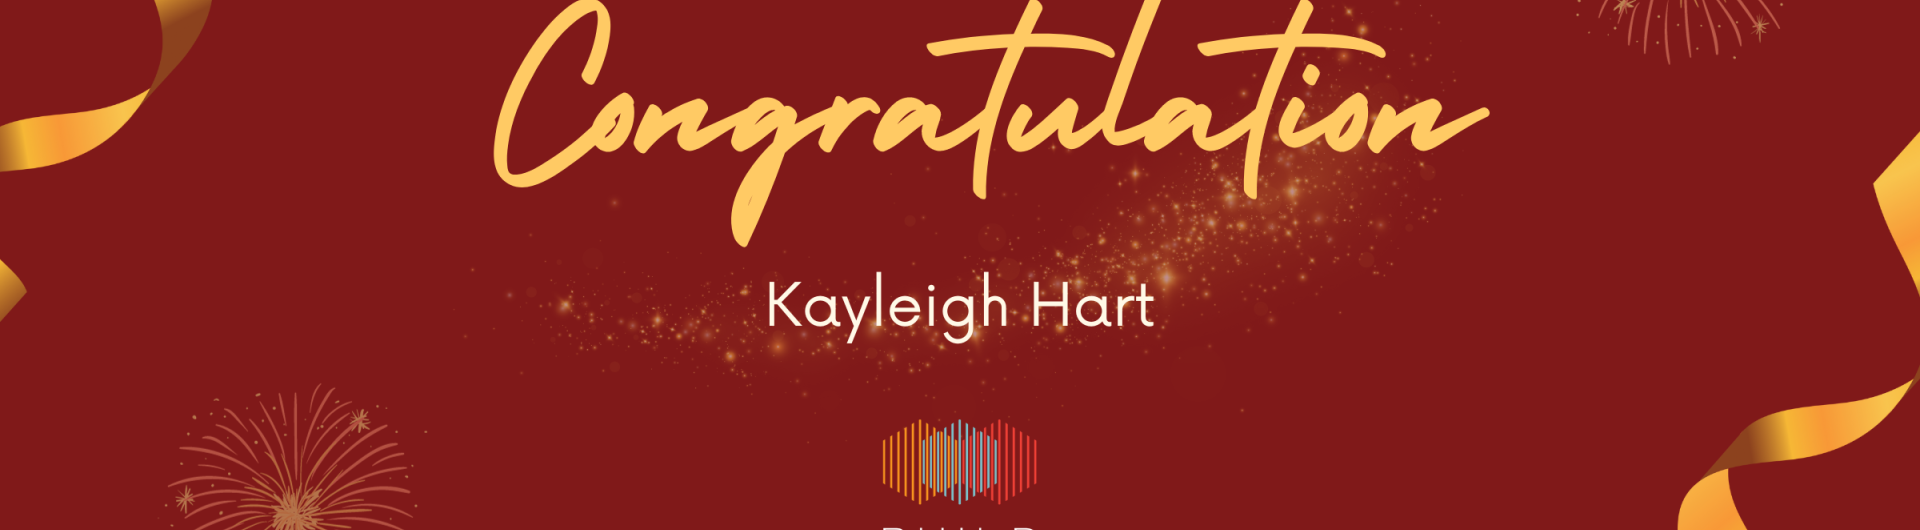 Congrats Kayleigh Hart